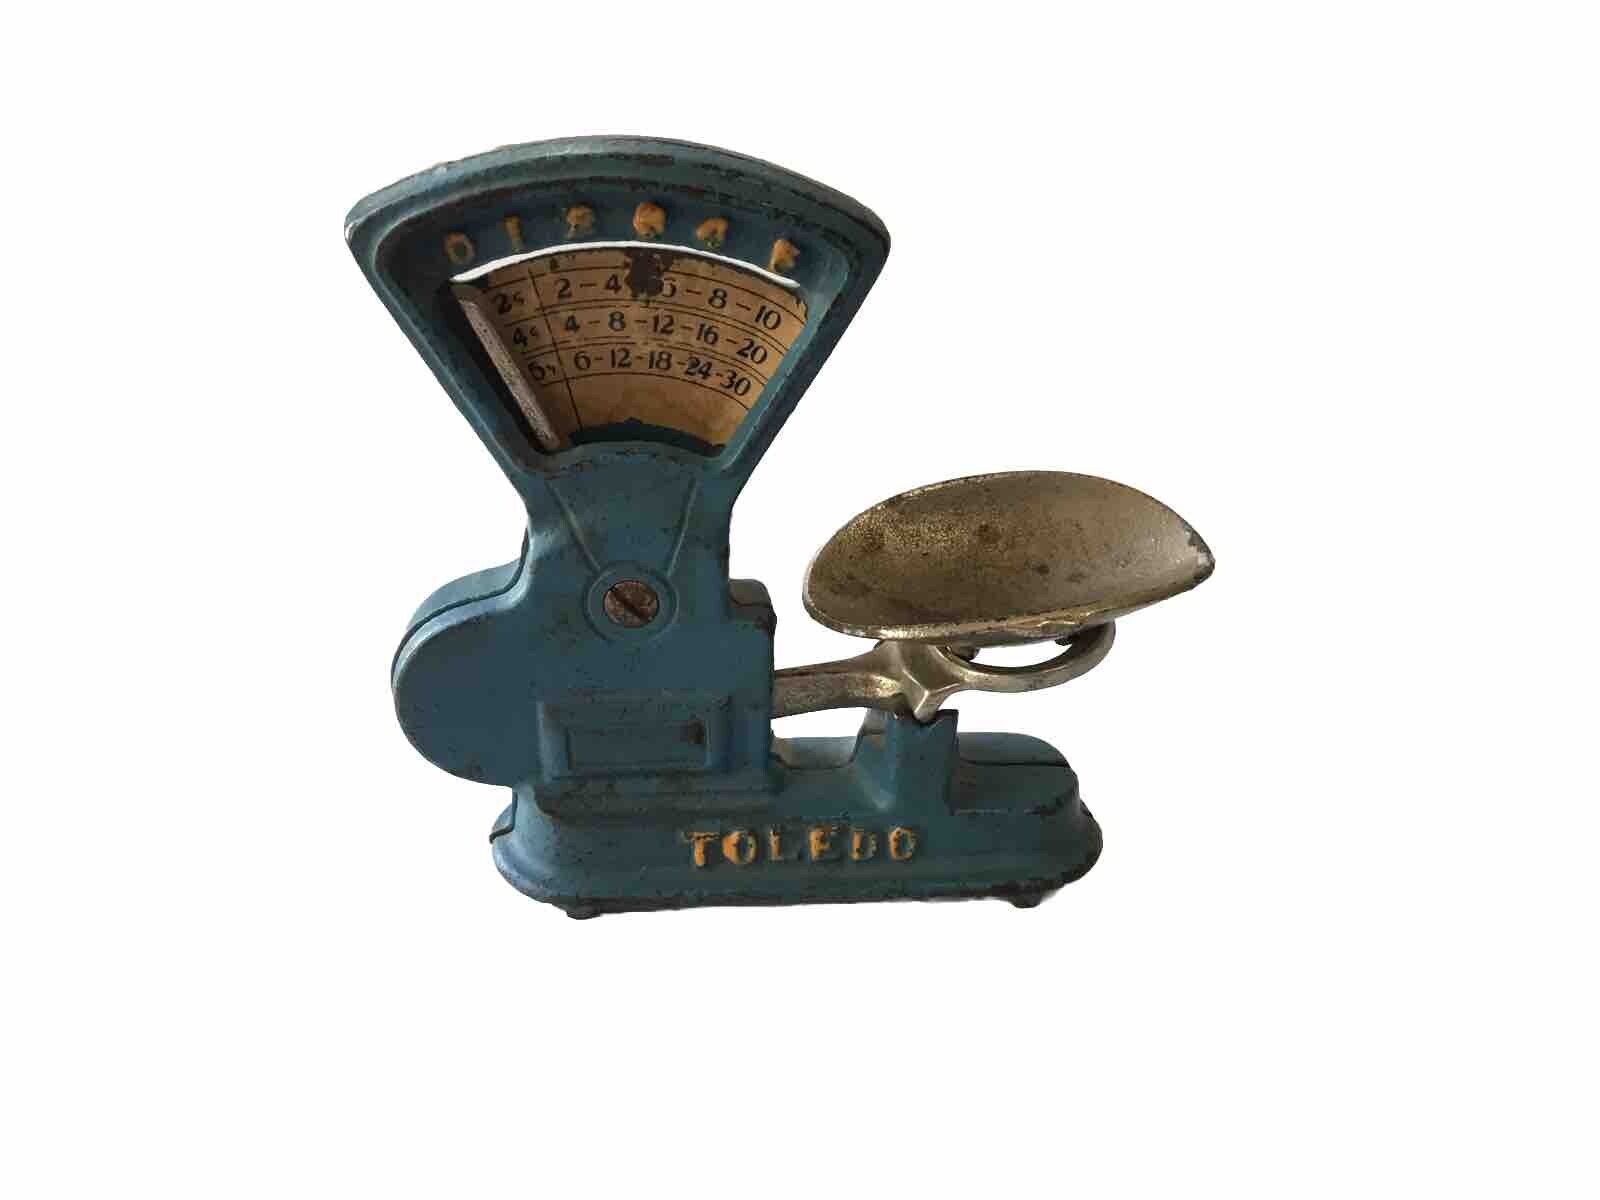 Antique Vintage - Cast Iron - ARCADE - Miniature Toy TOLEDO Scale - VERY NICE